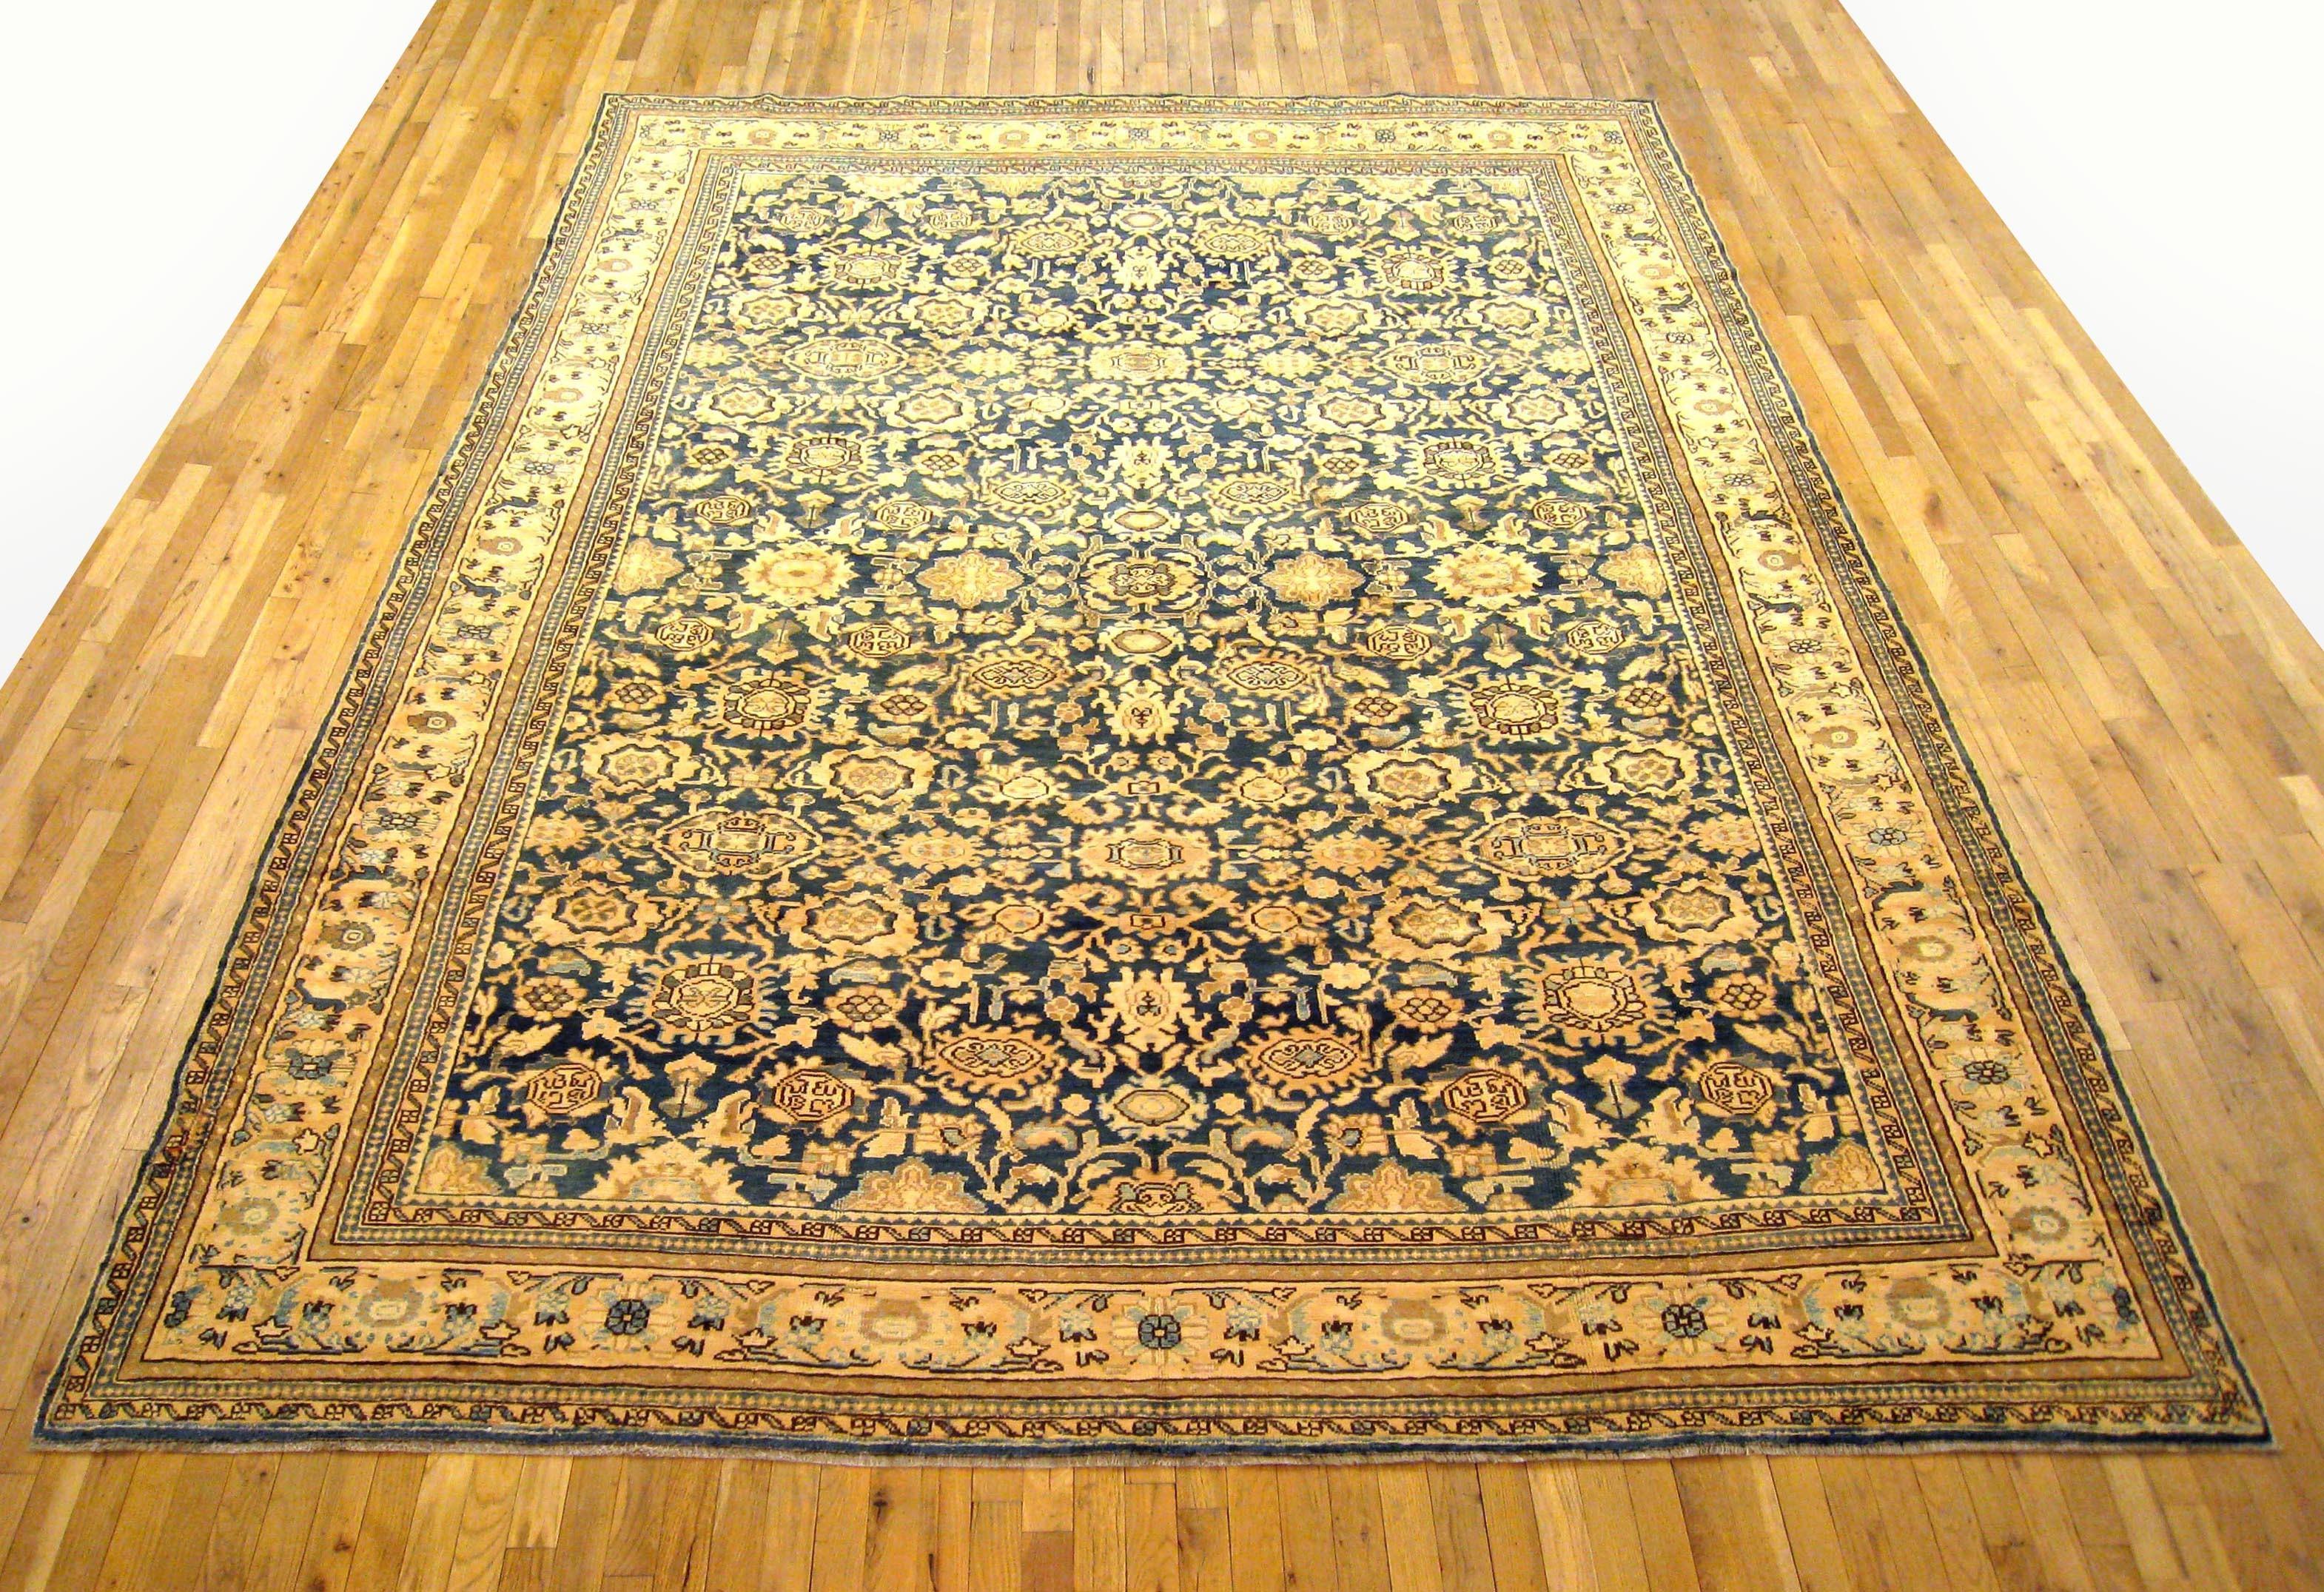 Antique Persian N. W. Persia Rug, Room size, circa 1920

An antique N.W. Persia oriental rug in room size, size 12'2